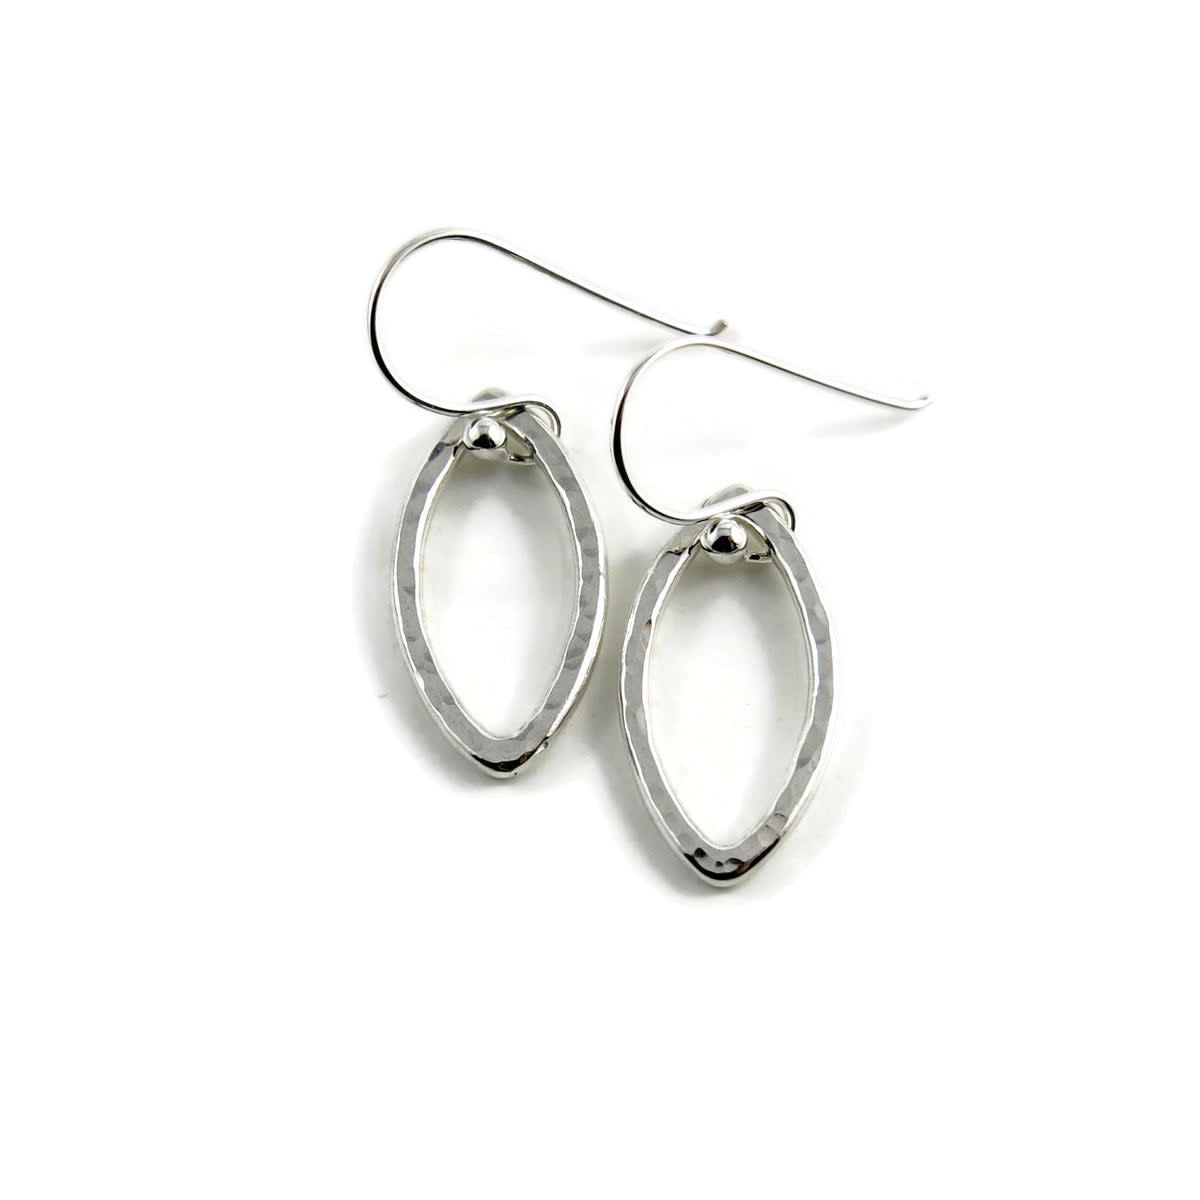 Mikel Grant Jewelry Earrings - Leaf